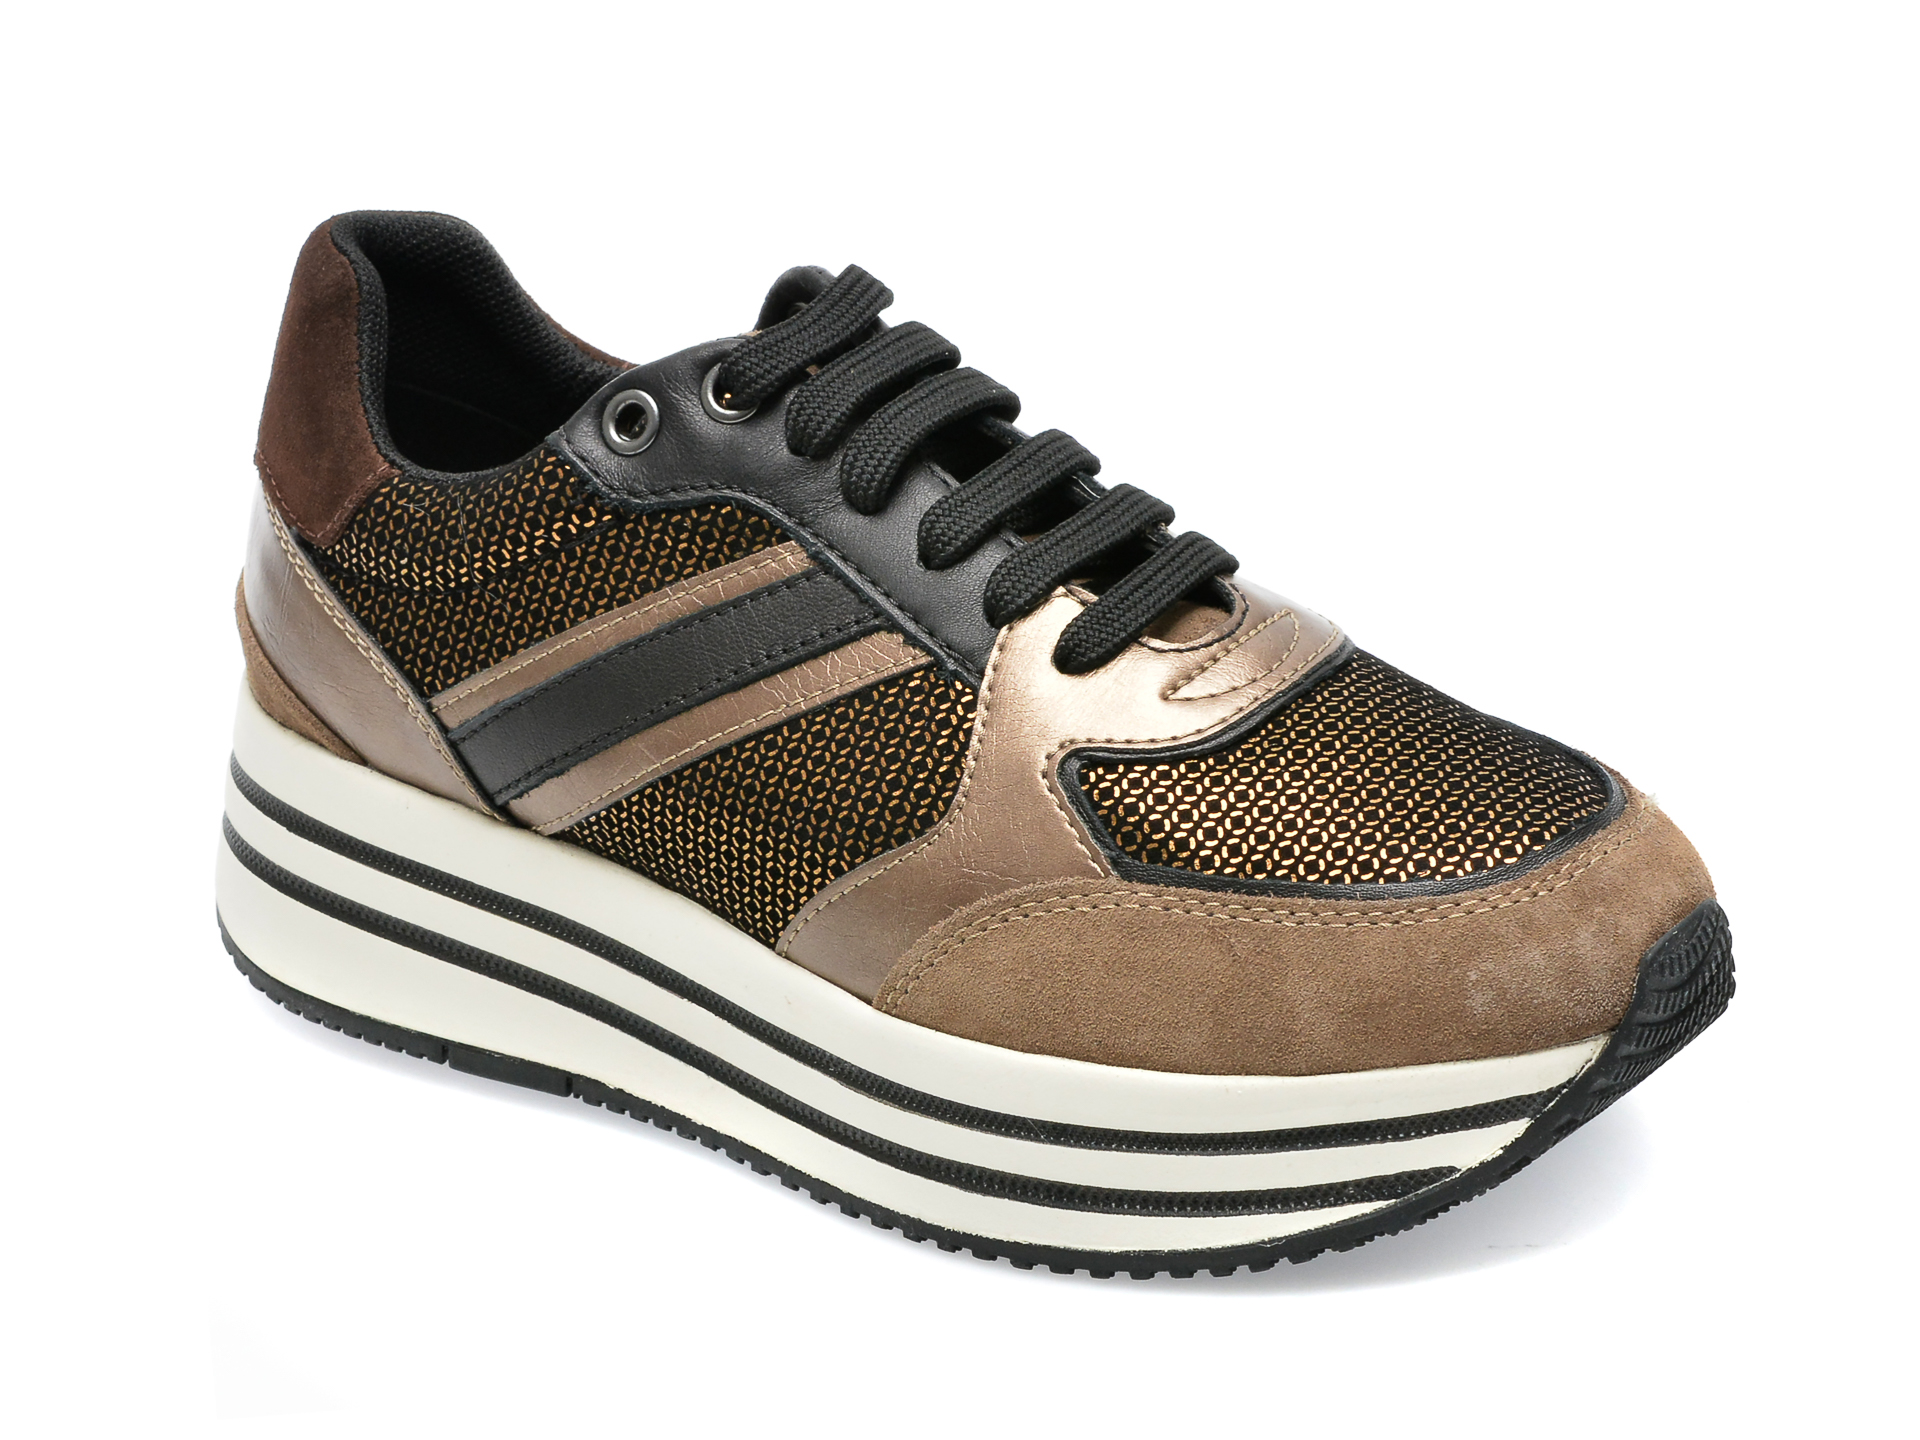 Pantofi Sport Geox Maro, D16qhb, Din Material Textil Si Piele Naturala